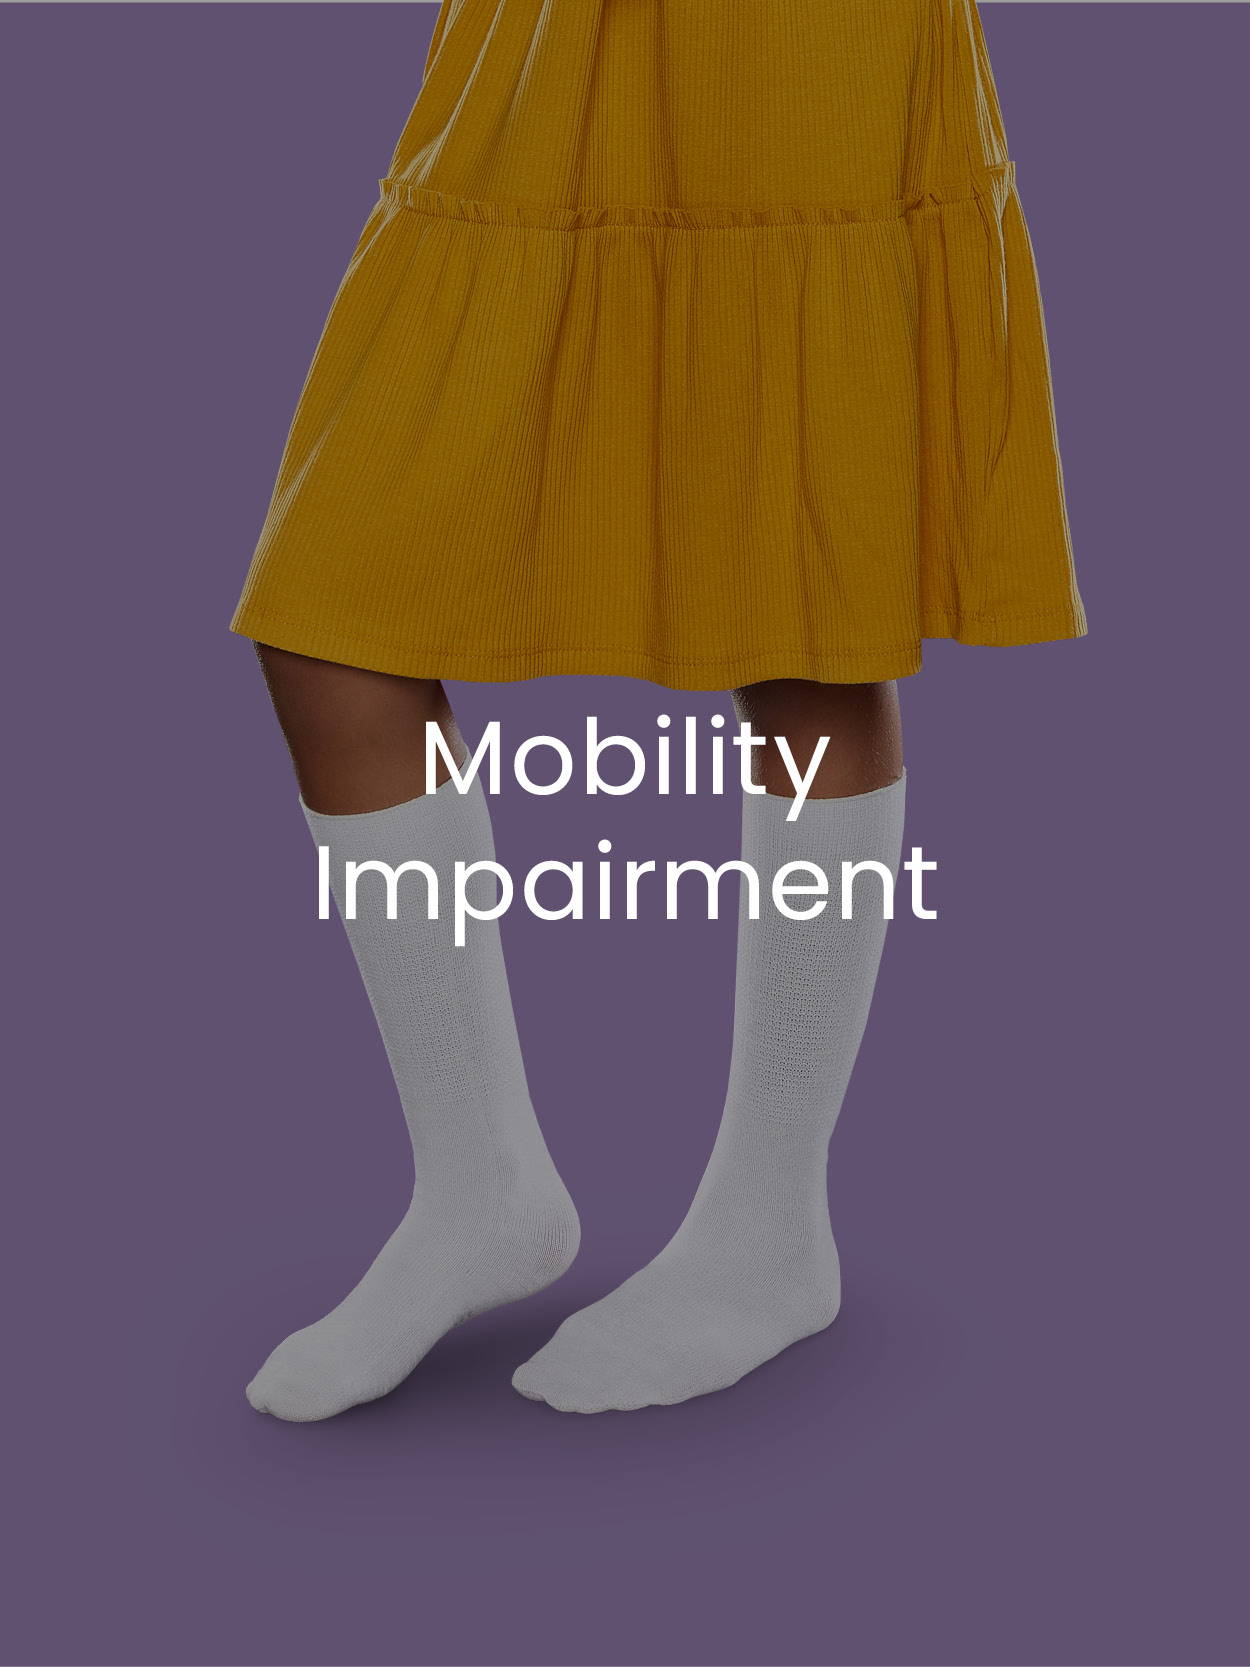 Mobility Impairment